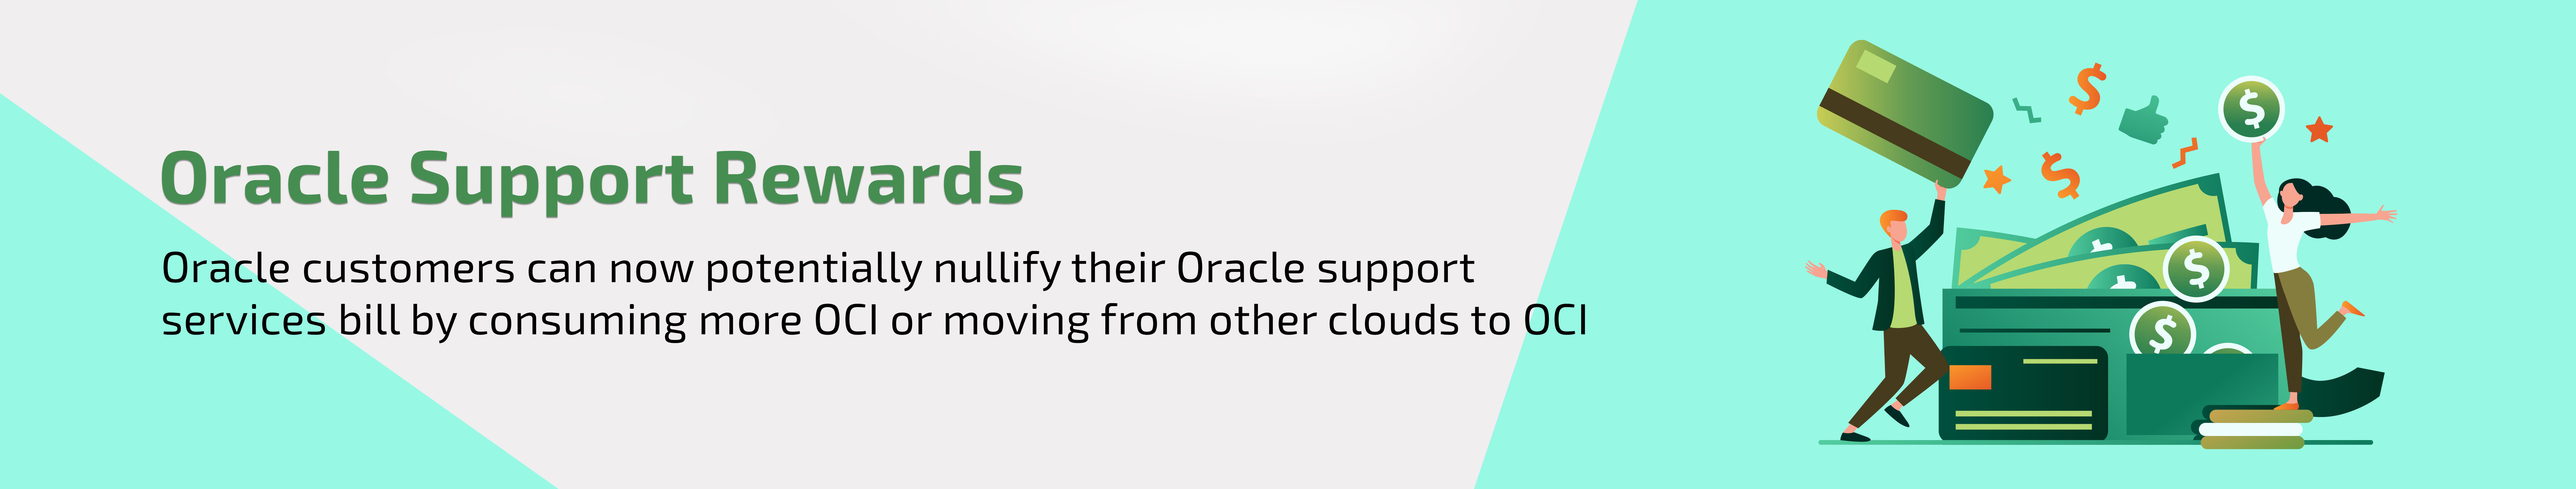 Oracle Support Rewards Incentivize Oracle Cloud Adoption